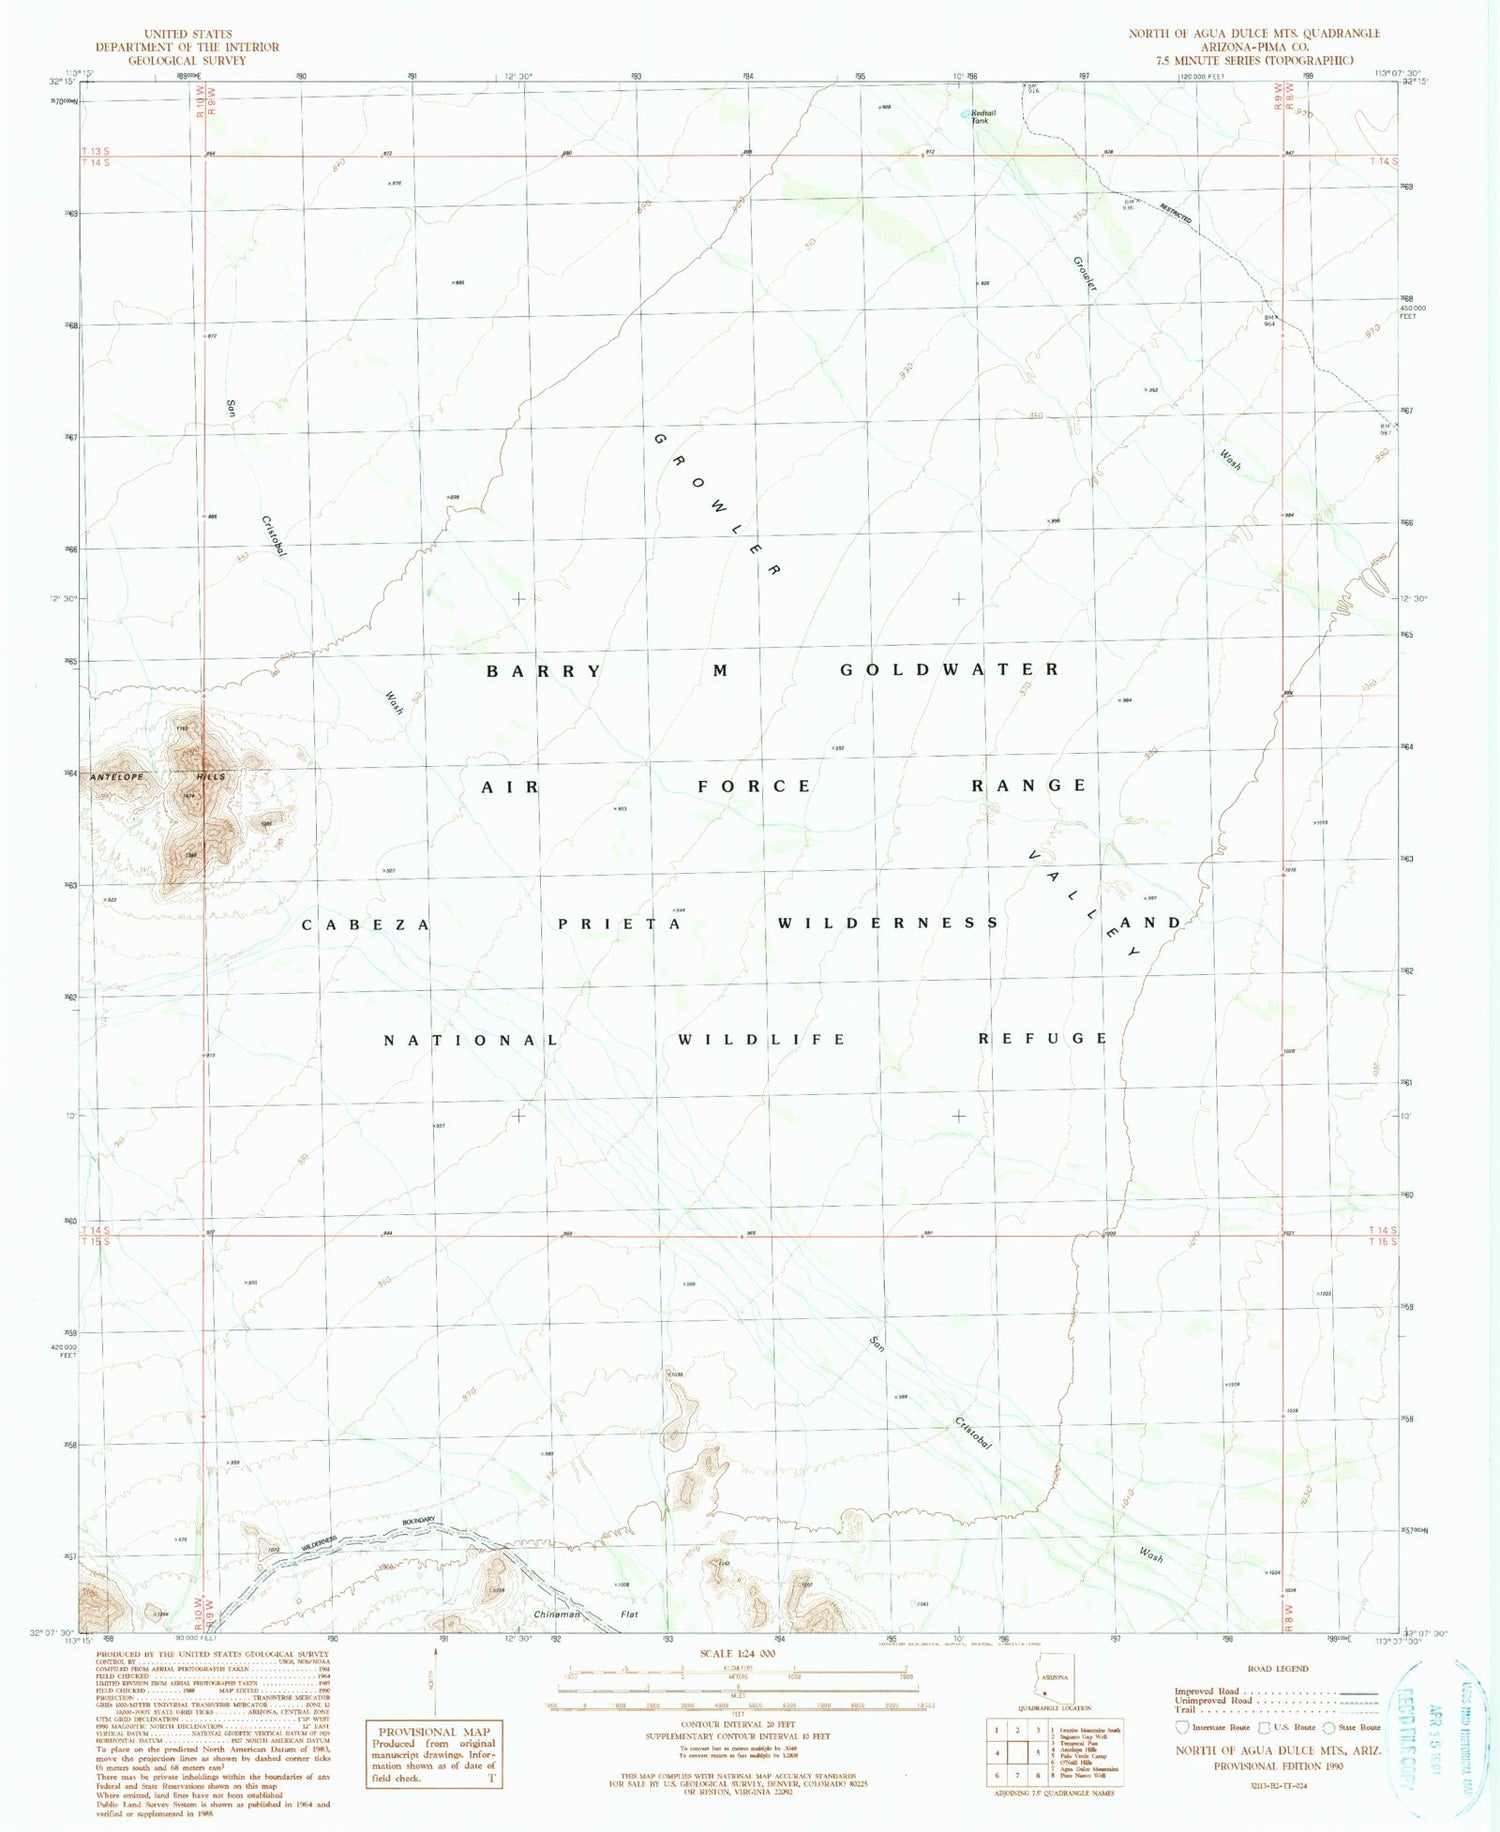 Classic USGS North of Agua Dulce Mountains Arizona 7.5'x7.5' Topo Map Image